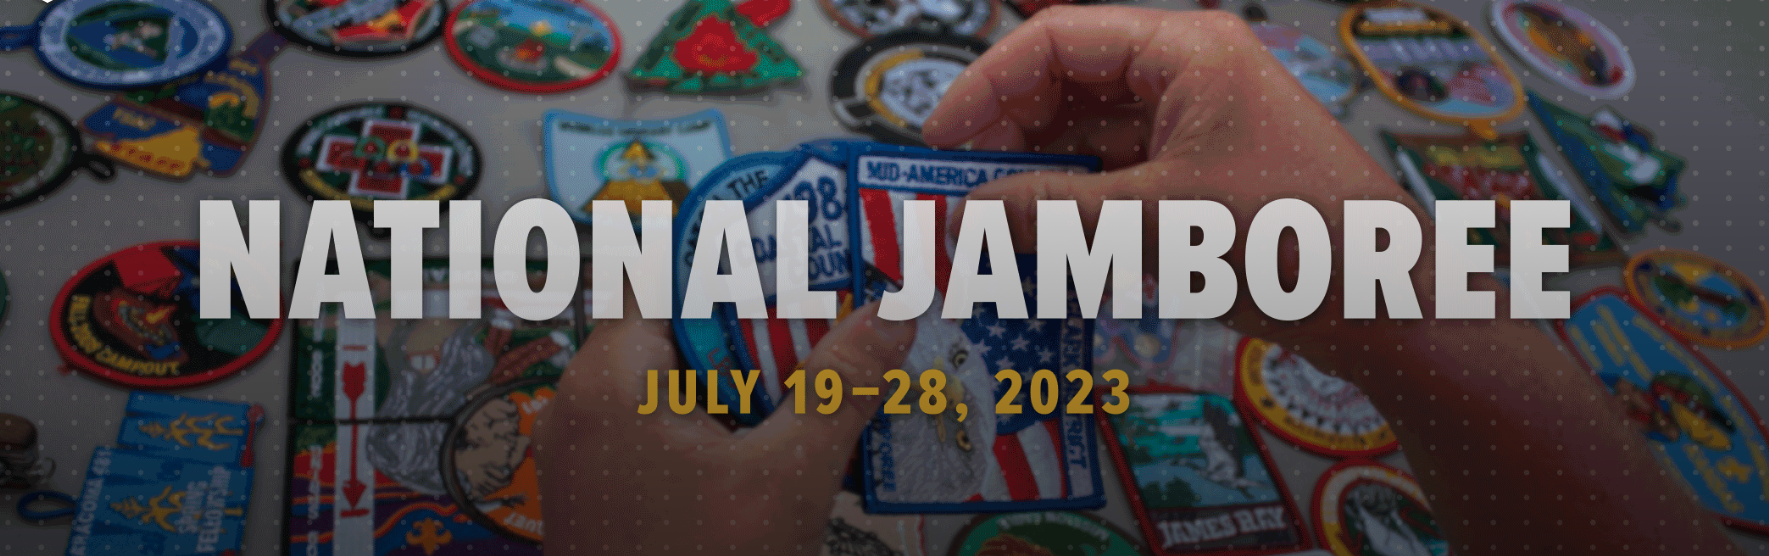 National Jamboree 2023